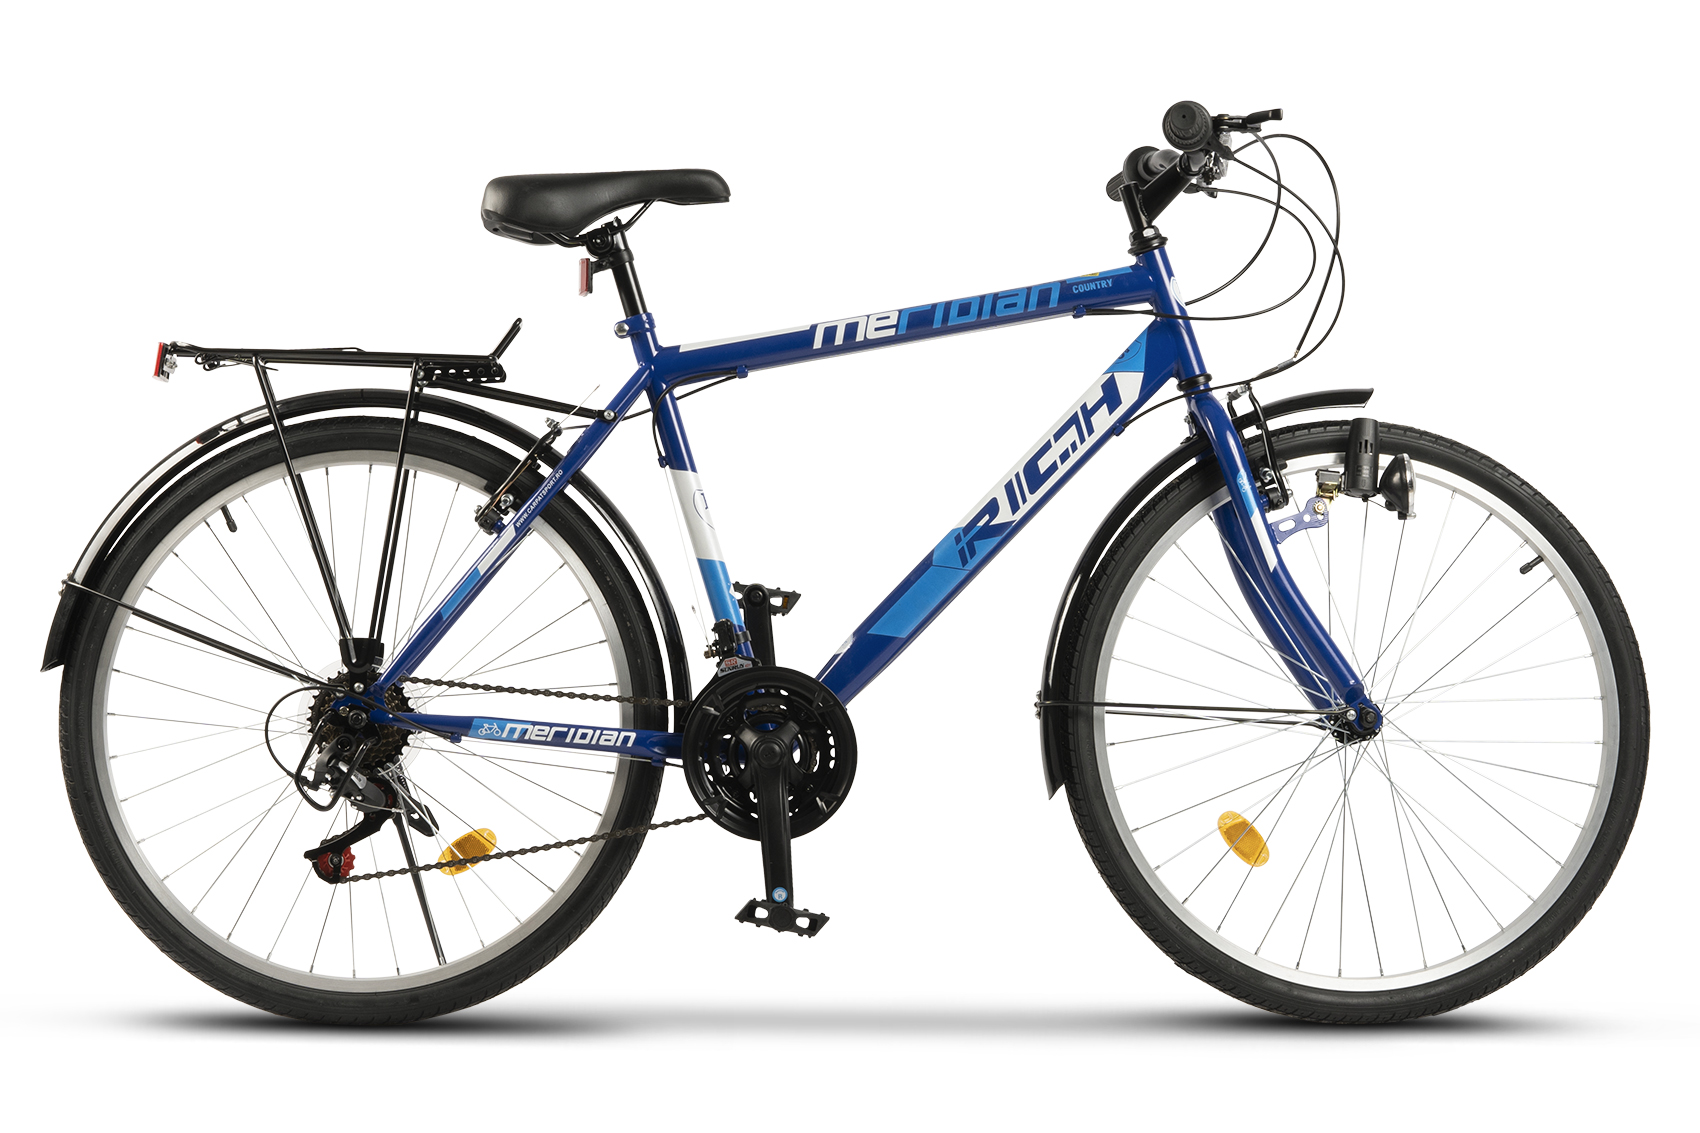 BICICLETE DE ORAS - Bicicleta City Rich Meridian R2635A 26", Albastru/Alb, https:carpatsport.ro